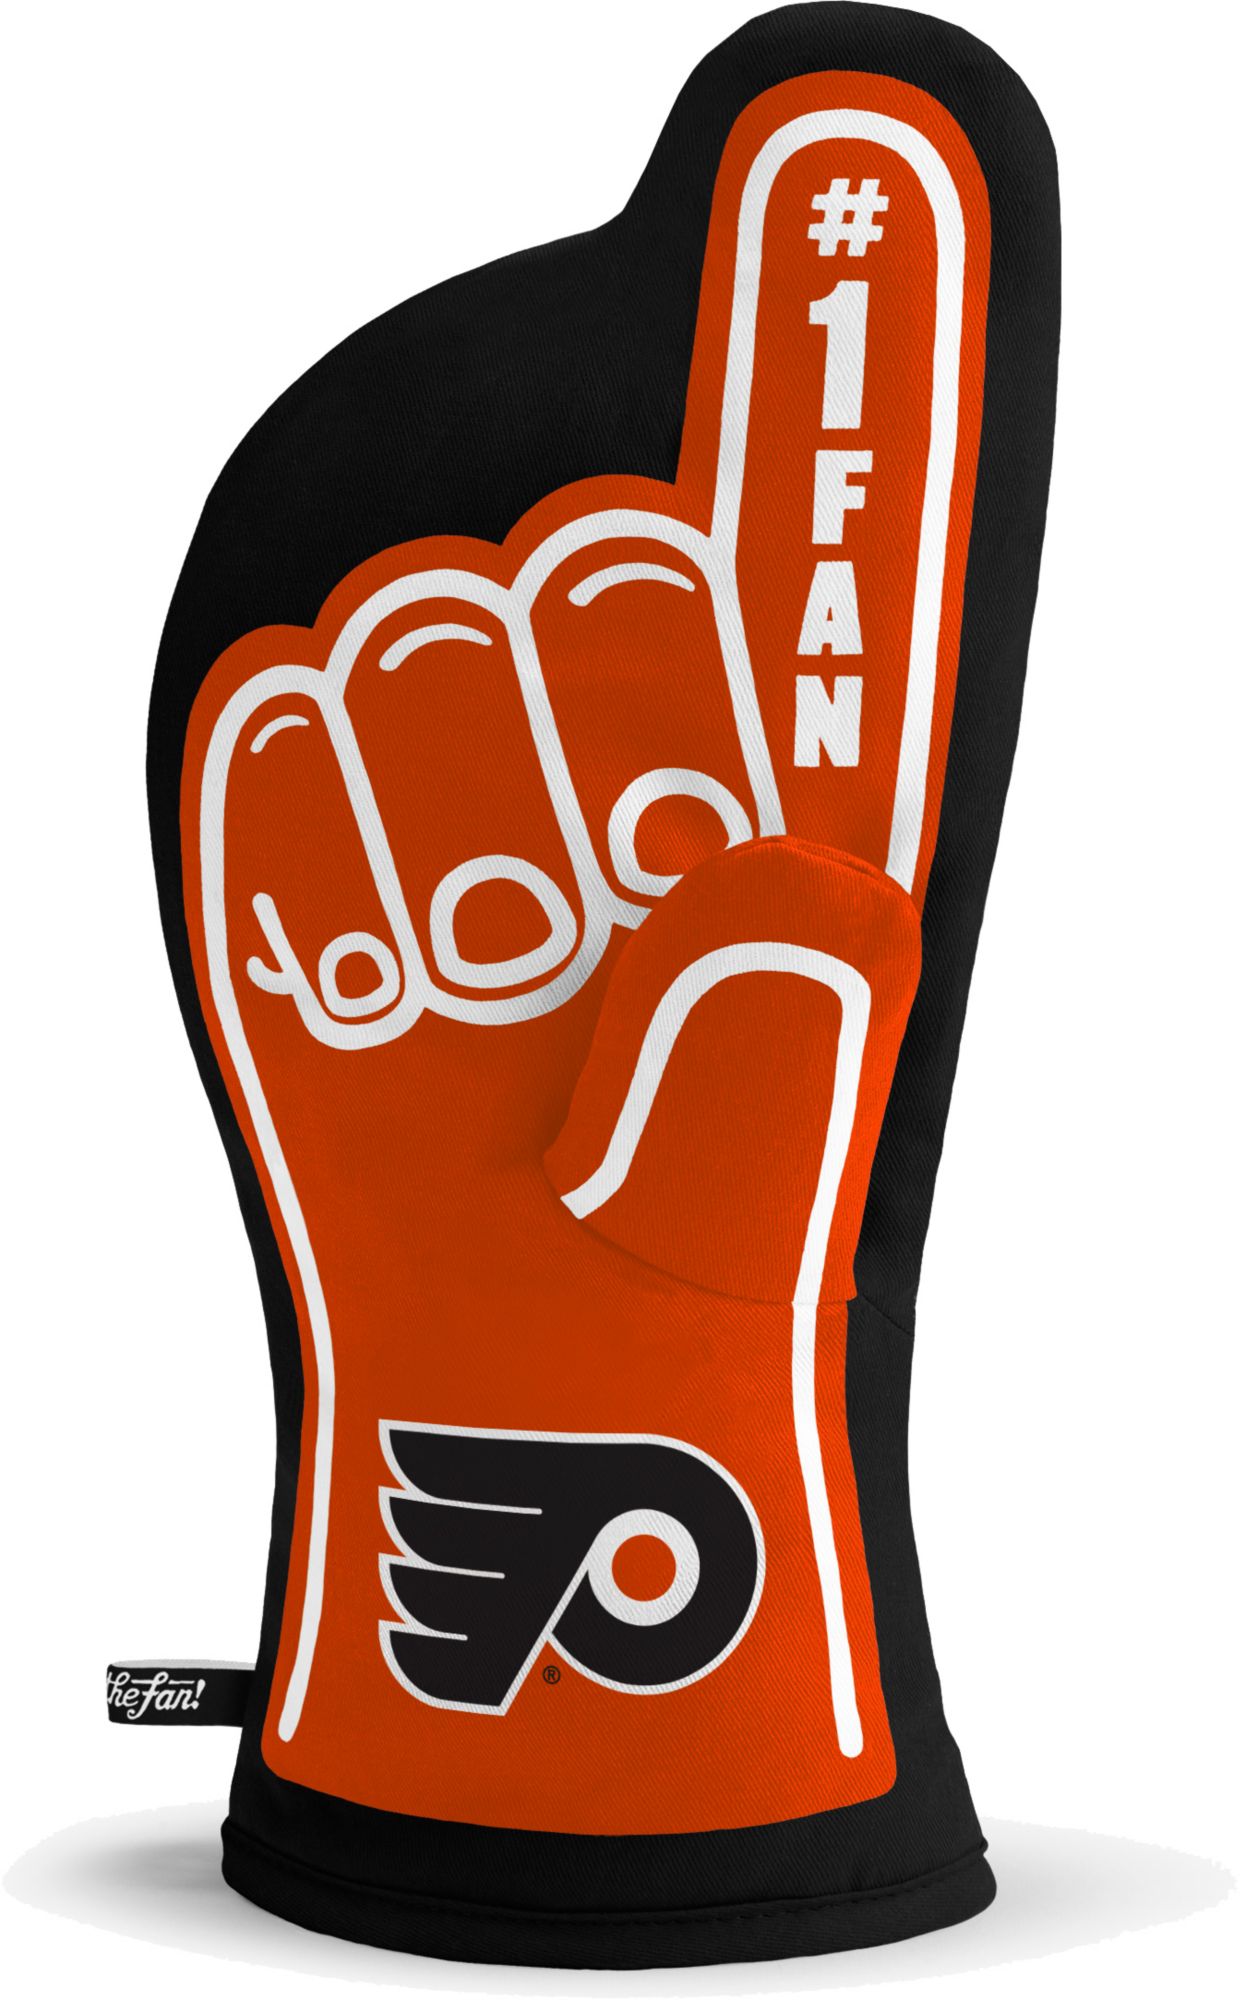 You The Fan Philadelphia Flyers #1 Oven Mitt